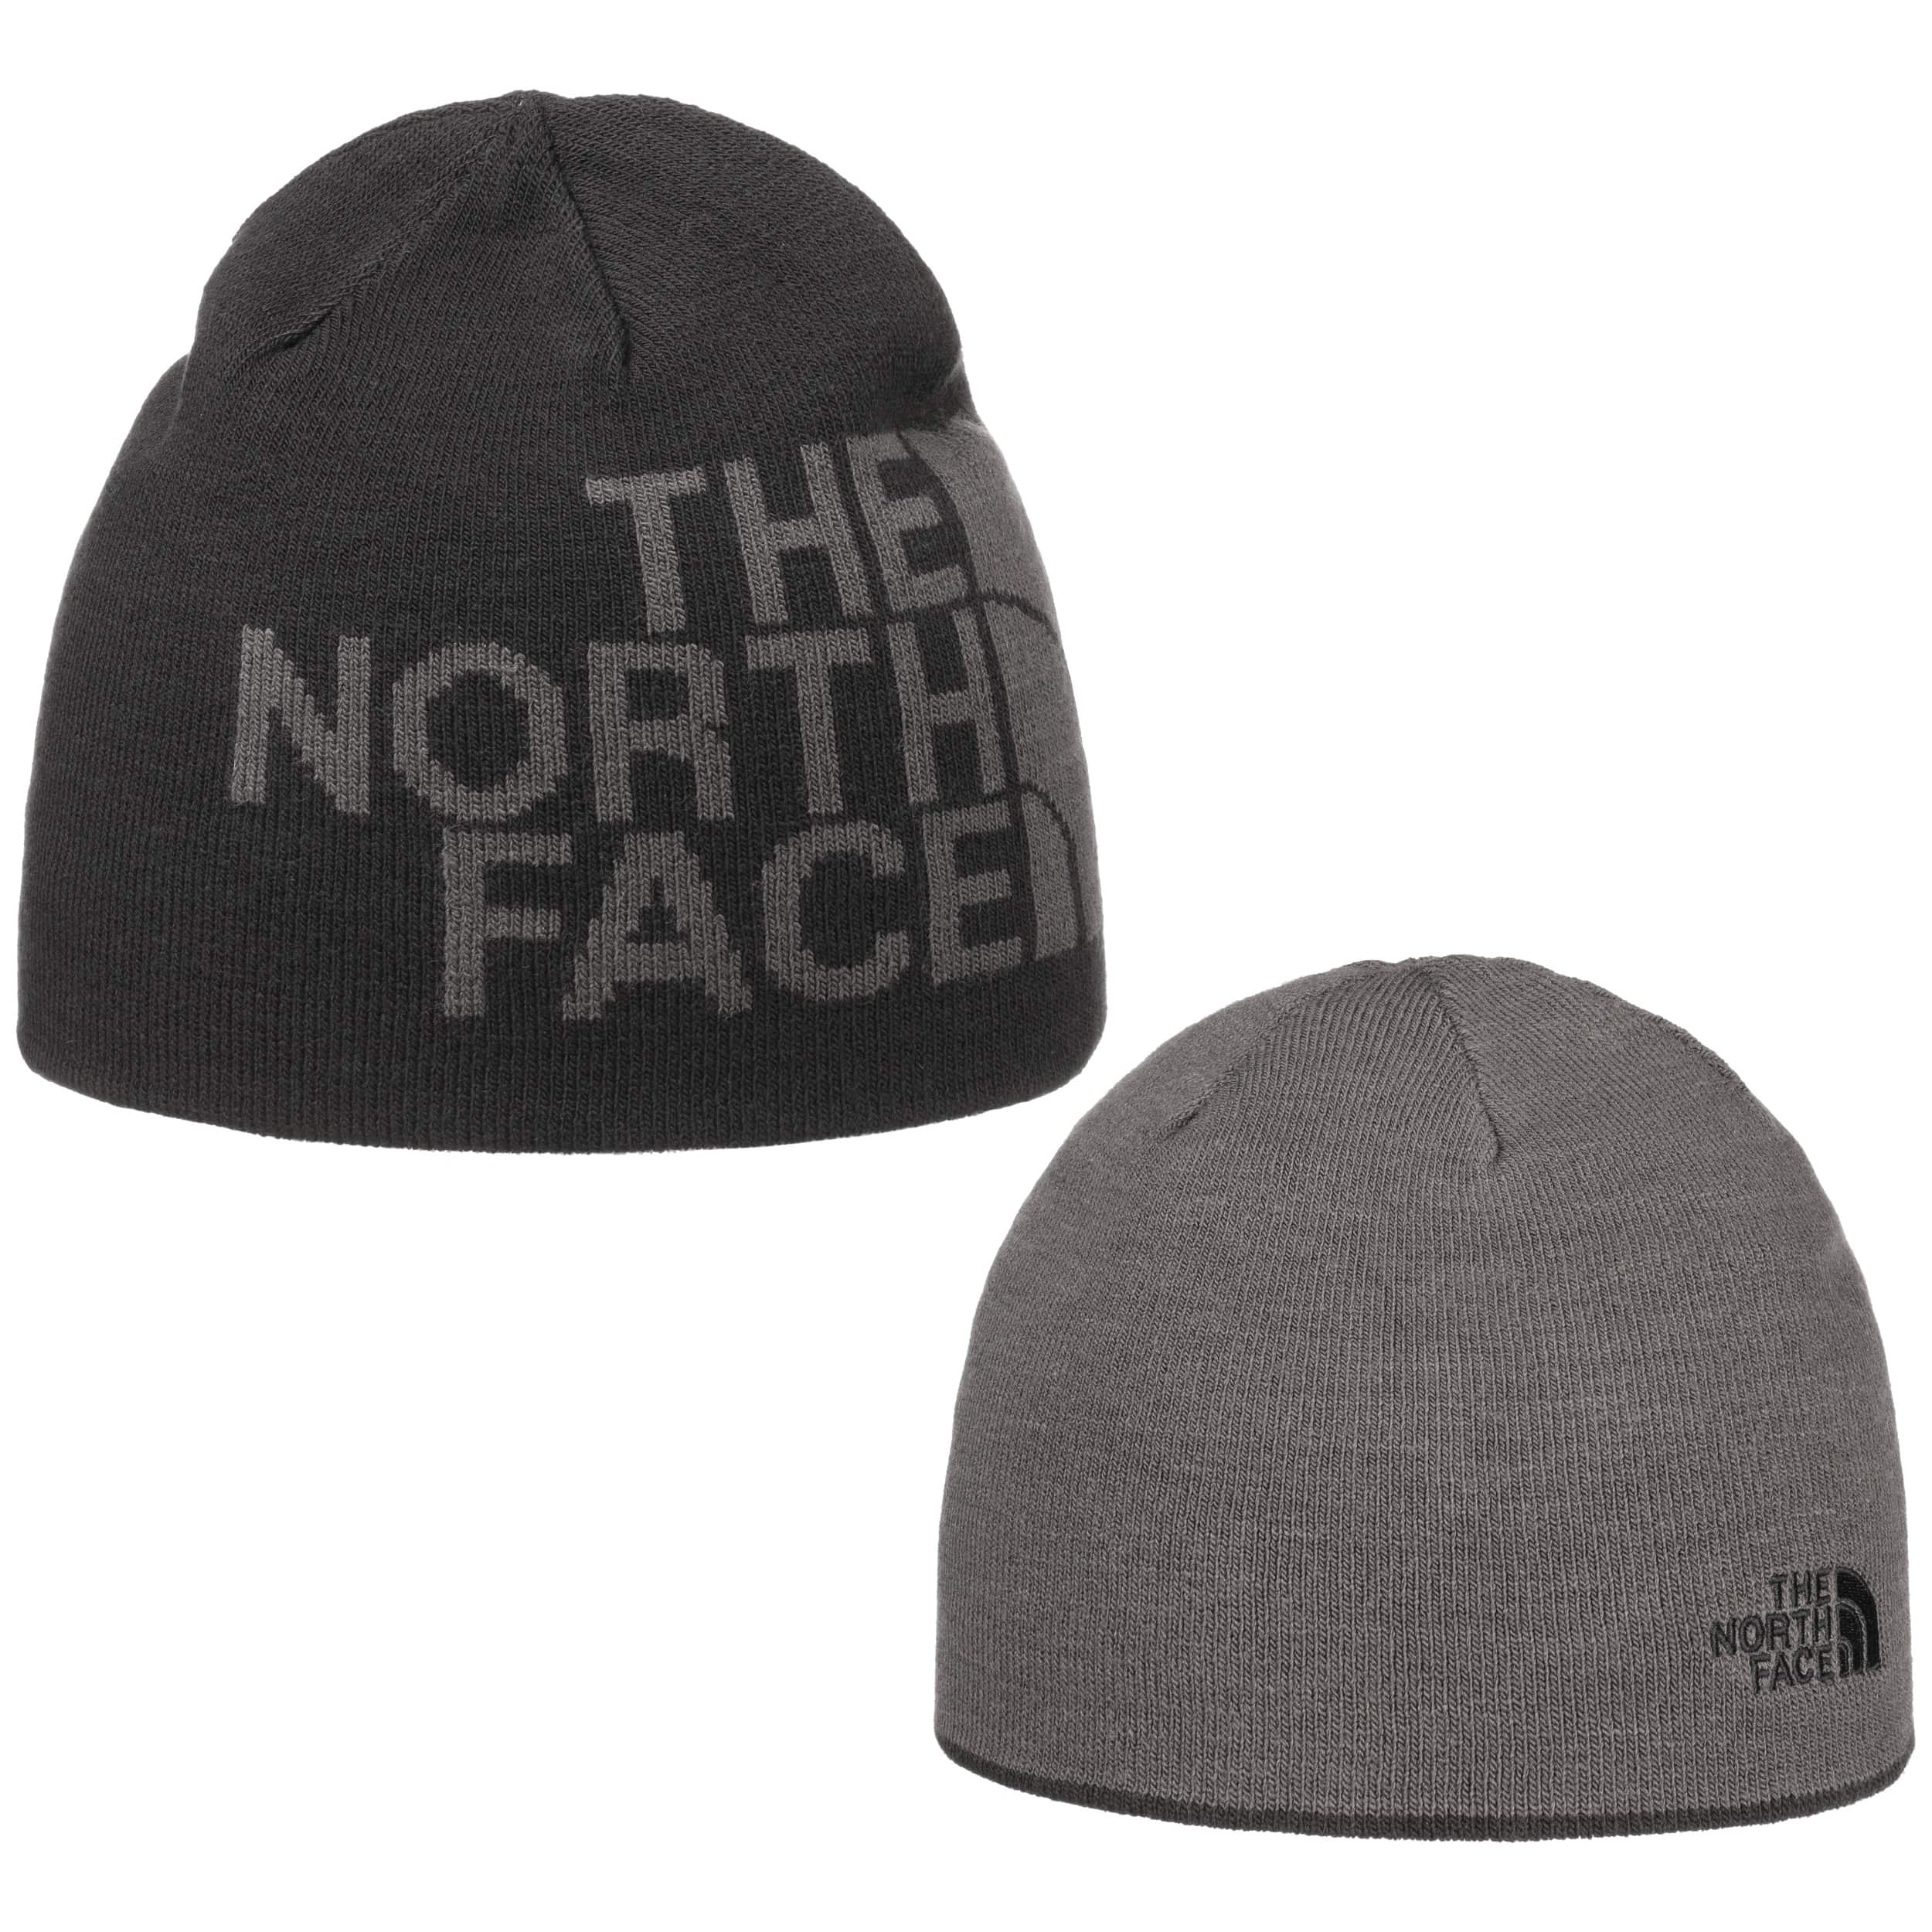 north face wool cap